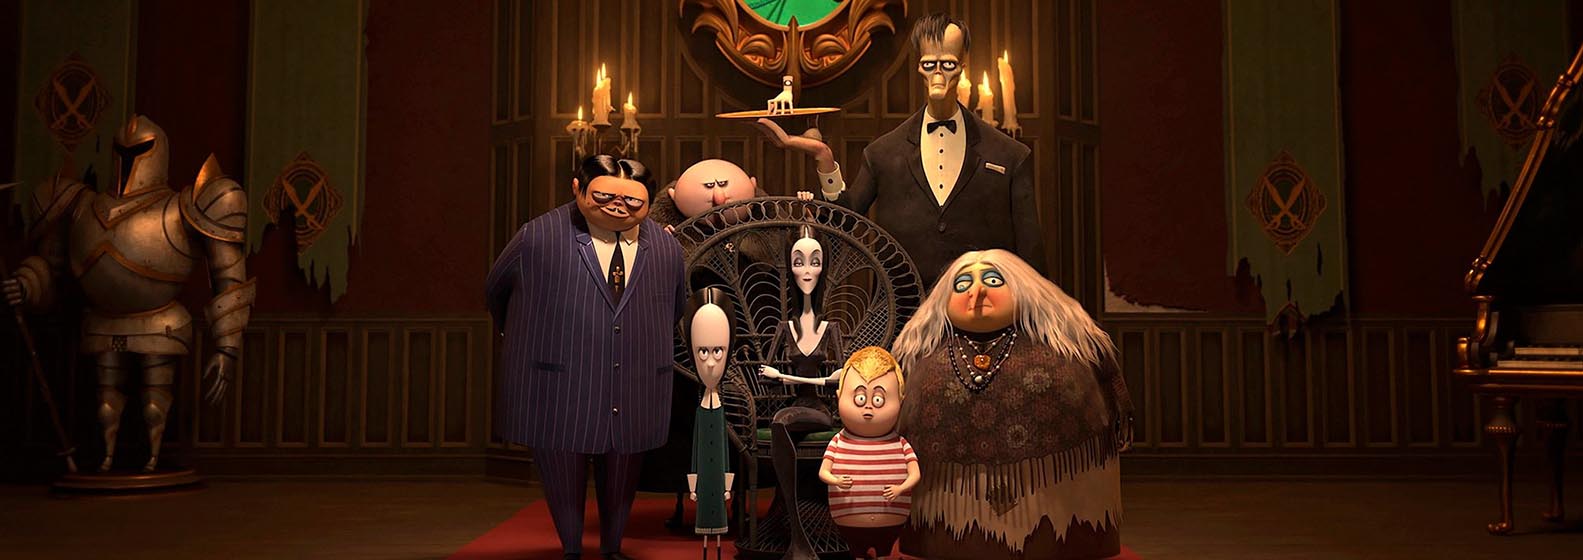 The Addams Family 2 - Header Image